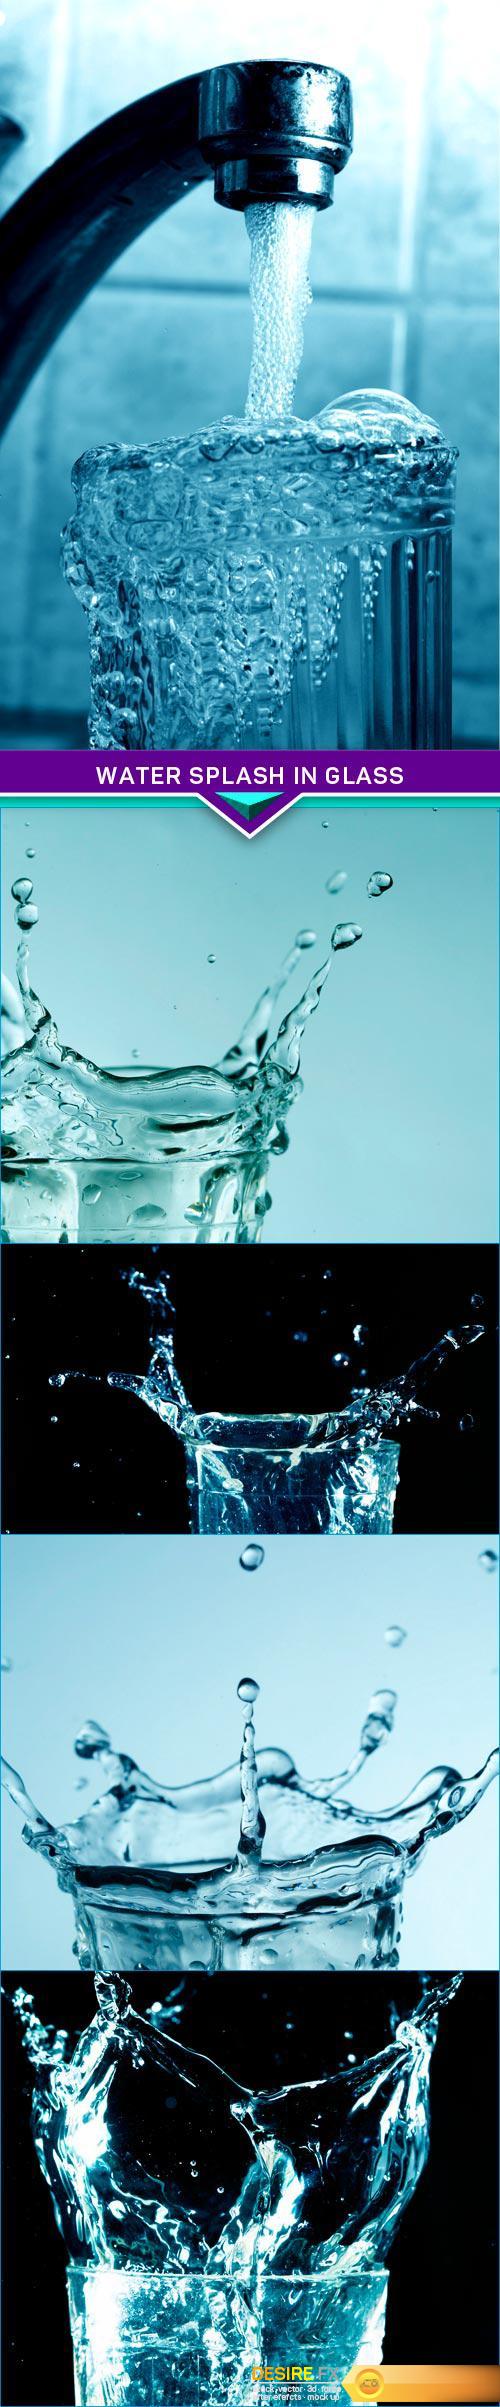 Water splash in glass 5X JPEG